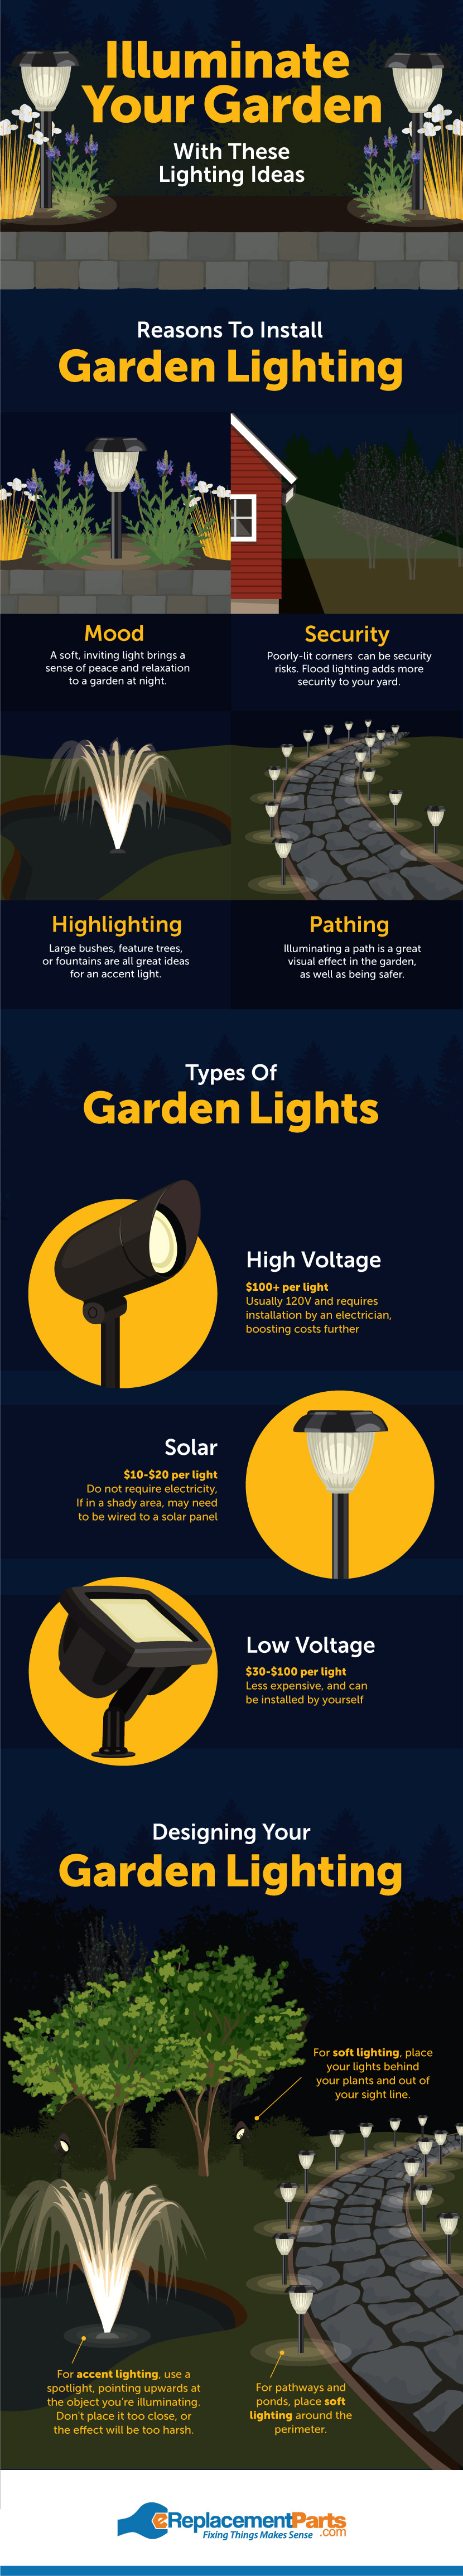 garden lighting infographic